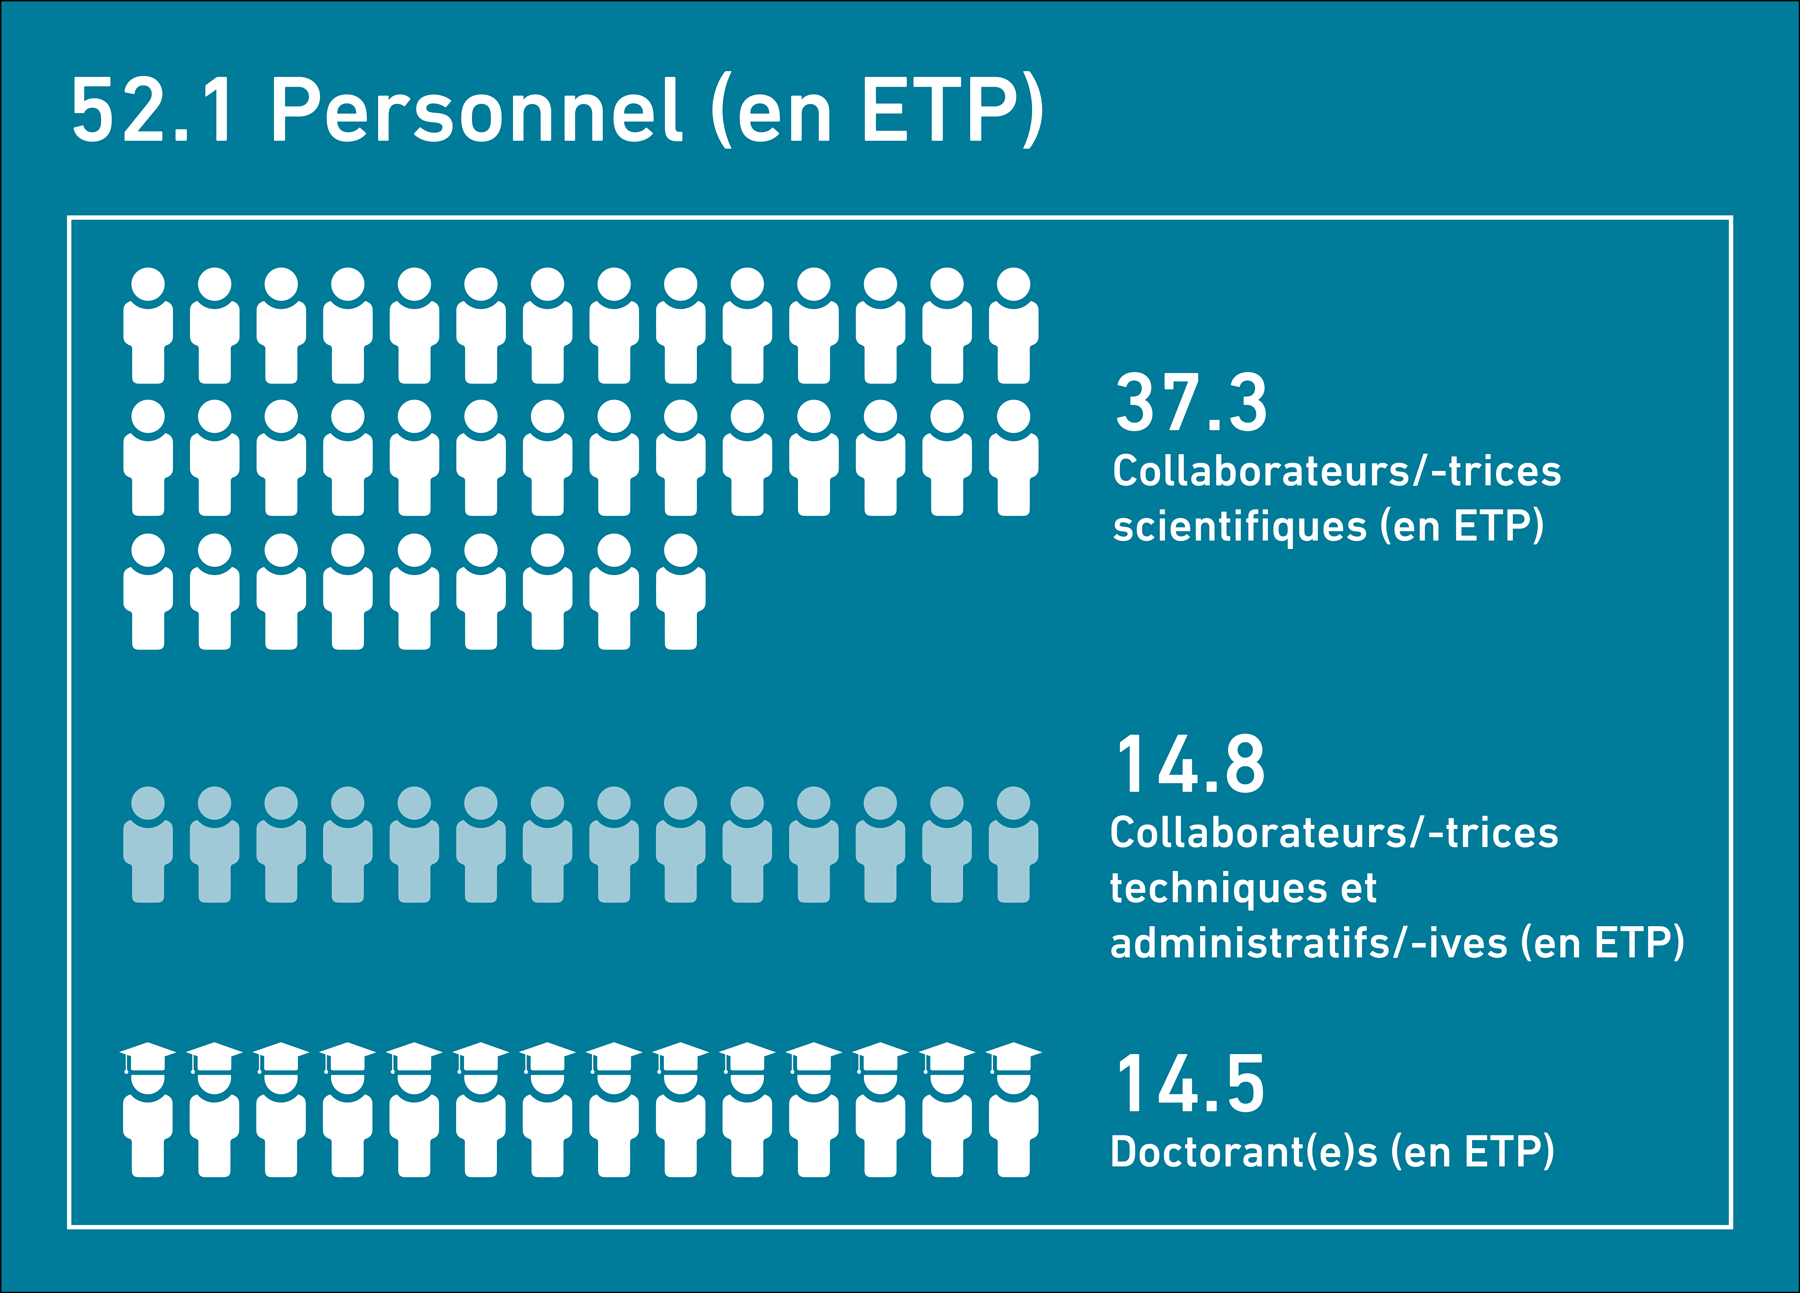 Enlarged view: 52.1 Personnel (en ETP)